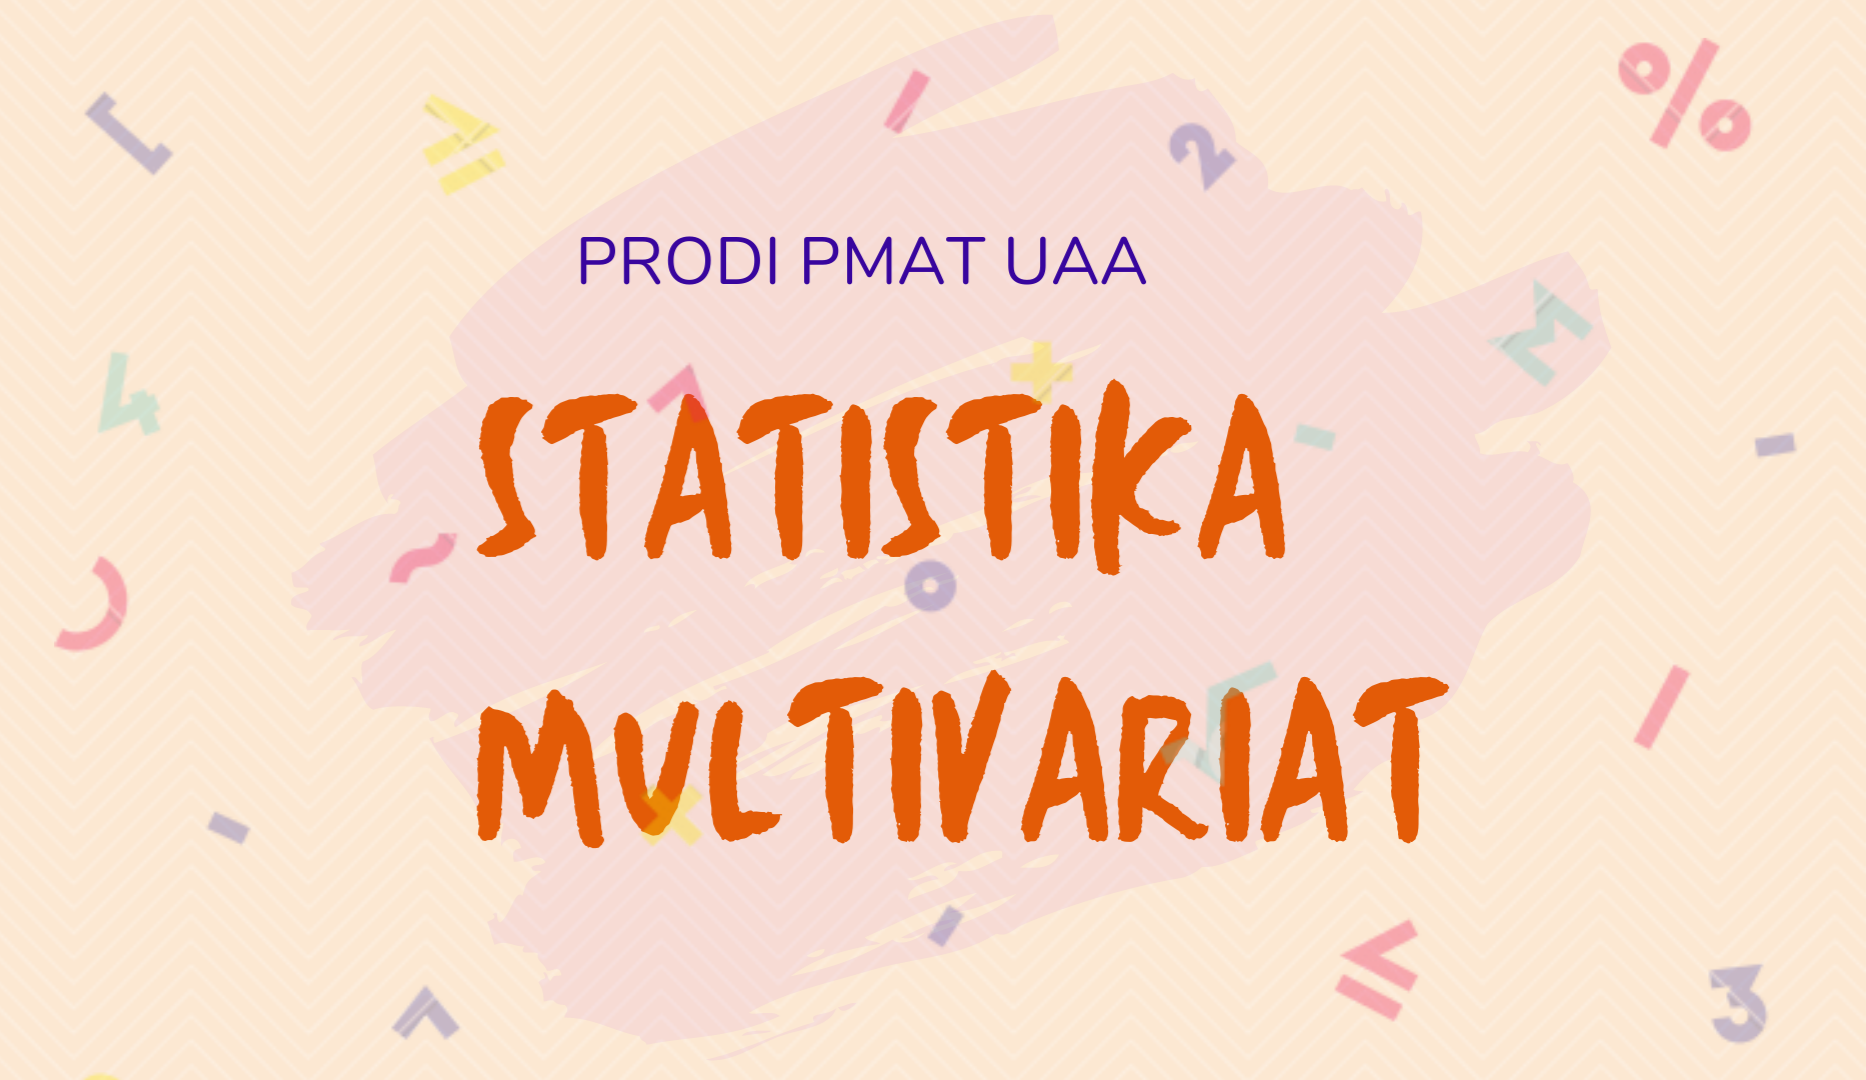 Statistika Multivariat